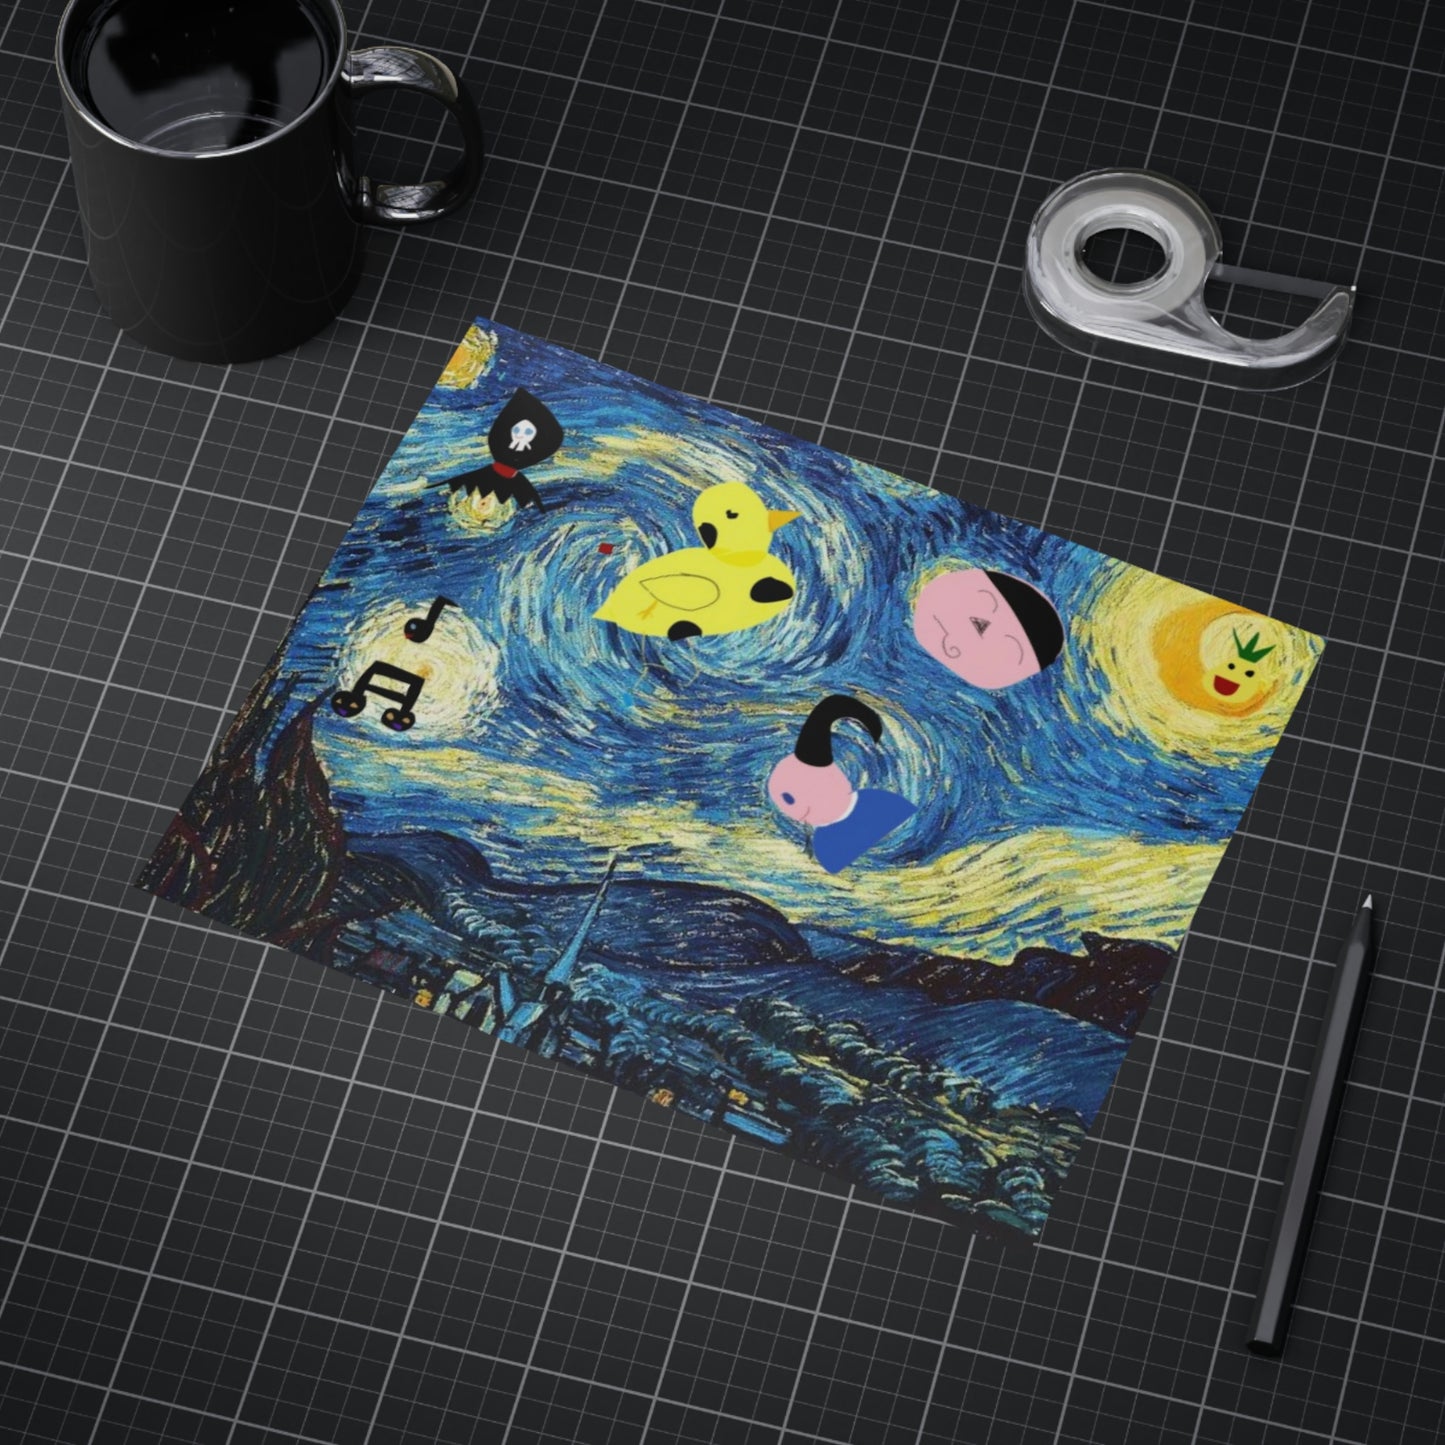 Oddly Starry Nights by D.B. print